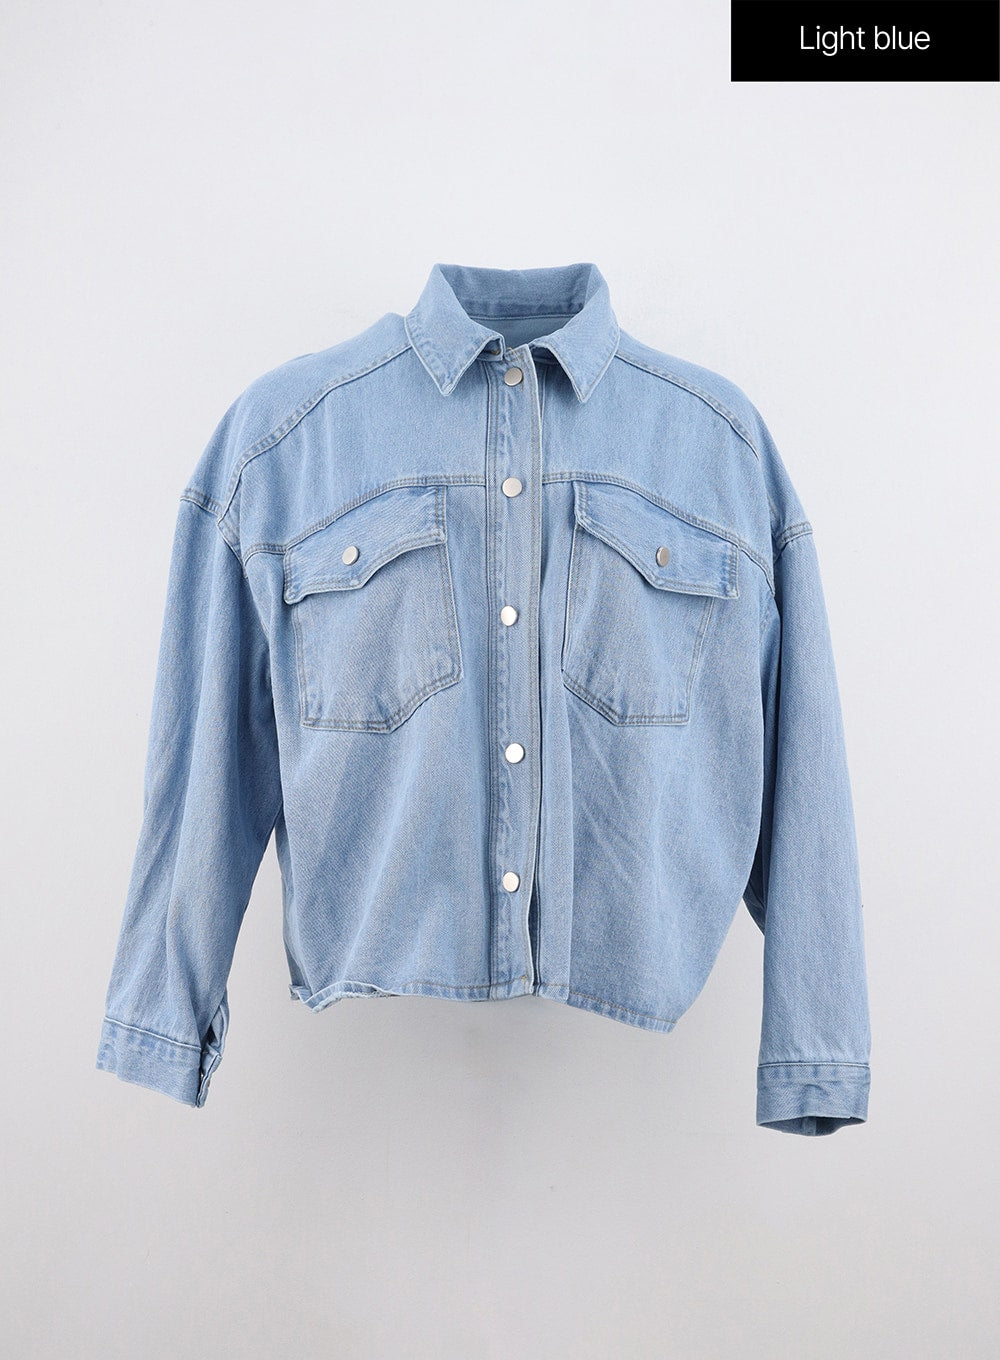 denim-jacket-oo312 / Light blue